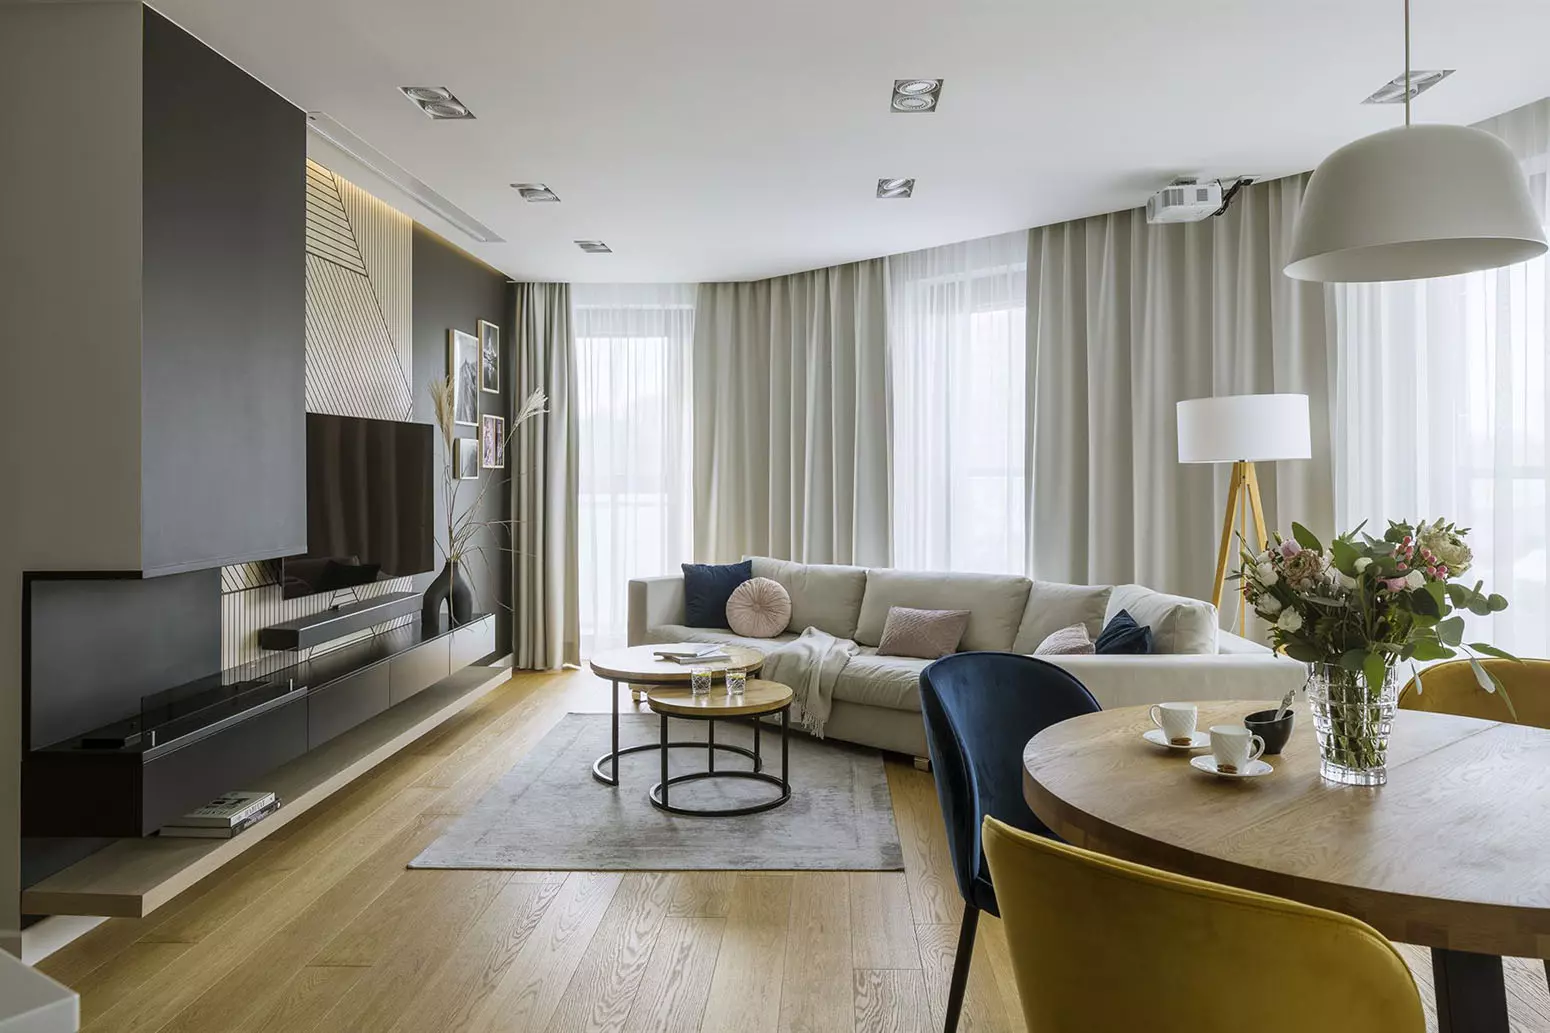 Pracownia projektowa Warszawa - Better Home Interior Design